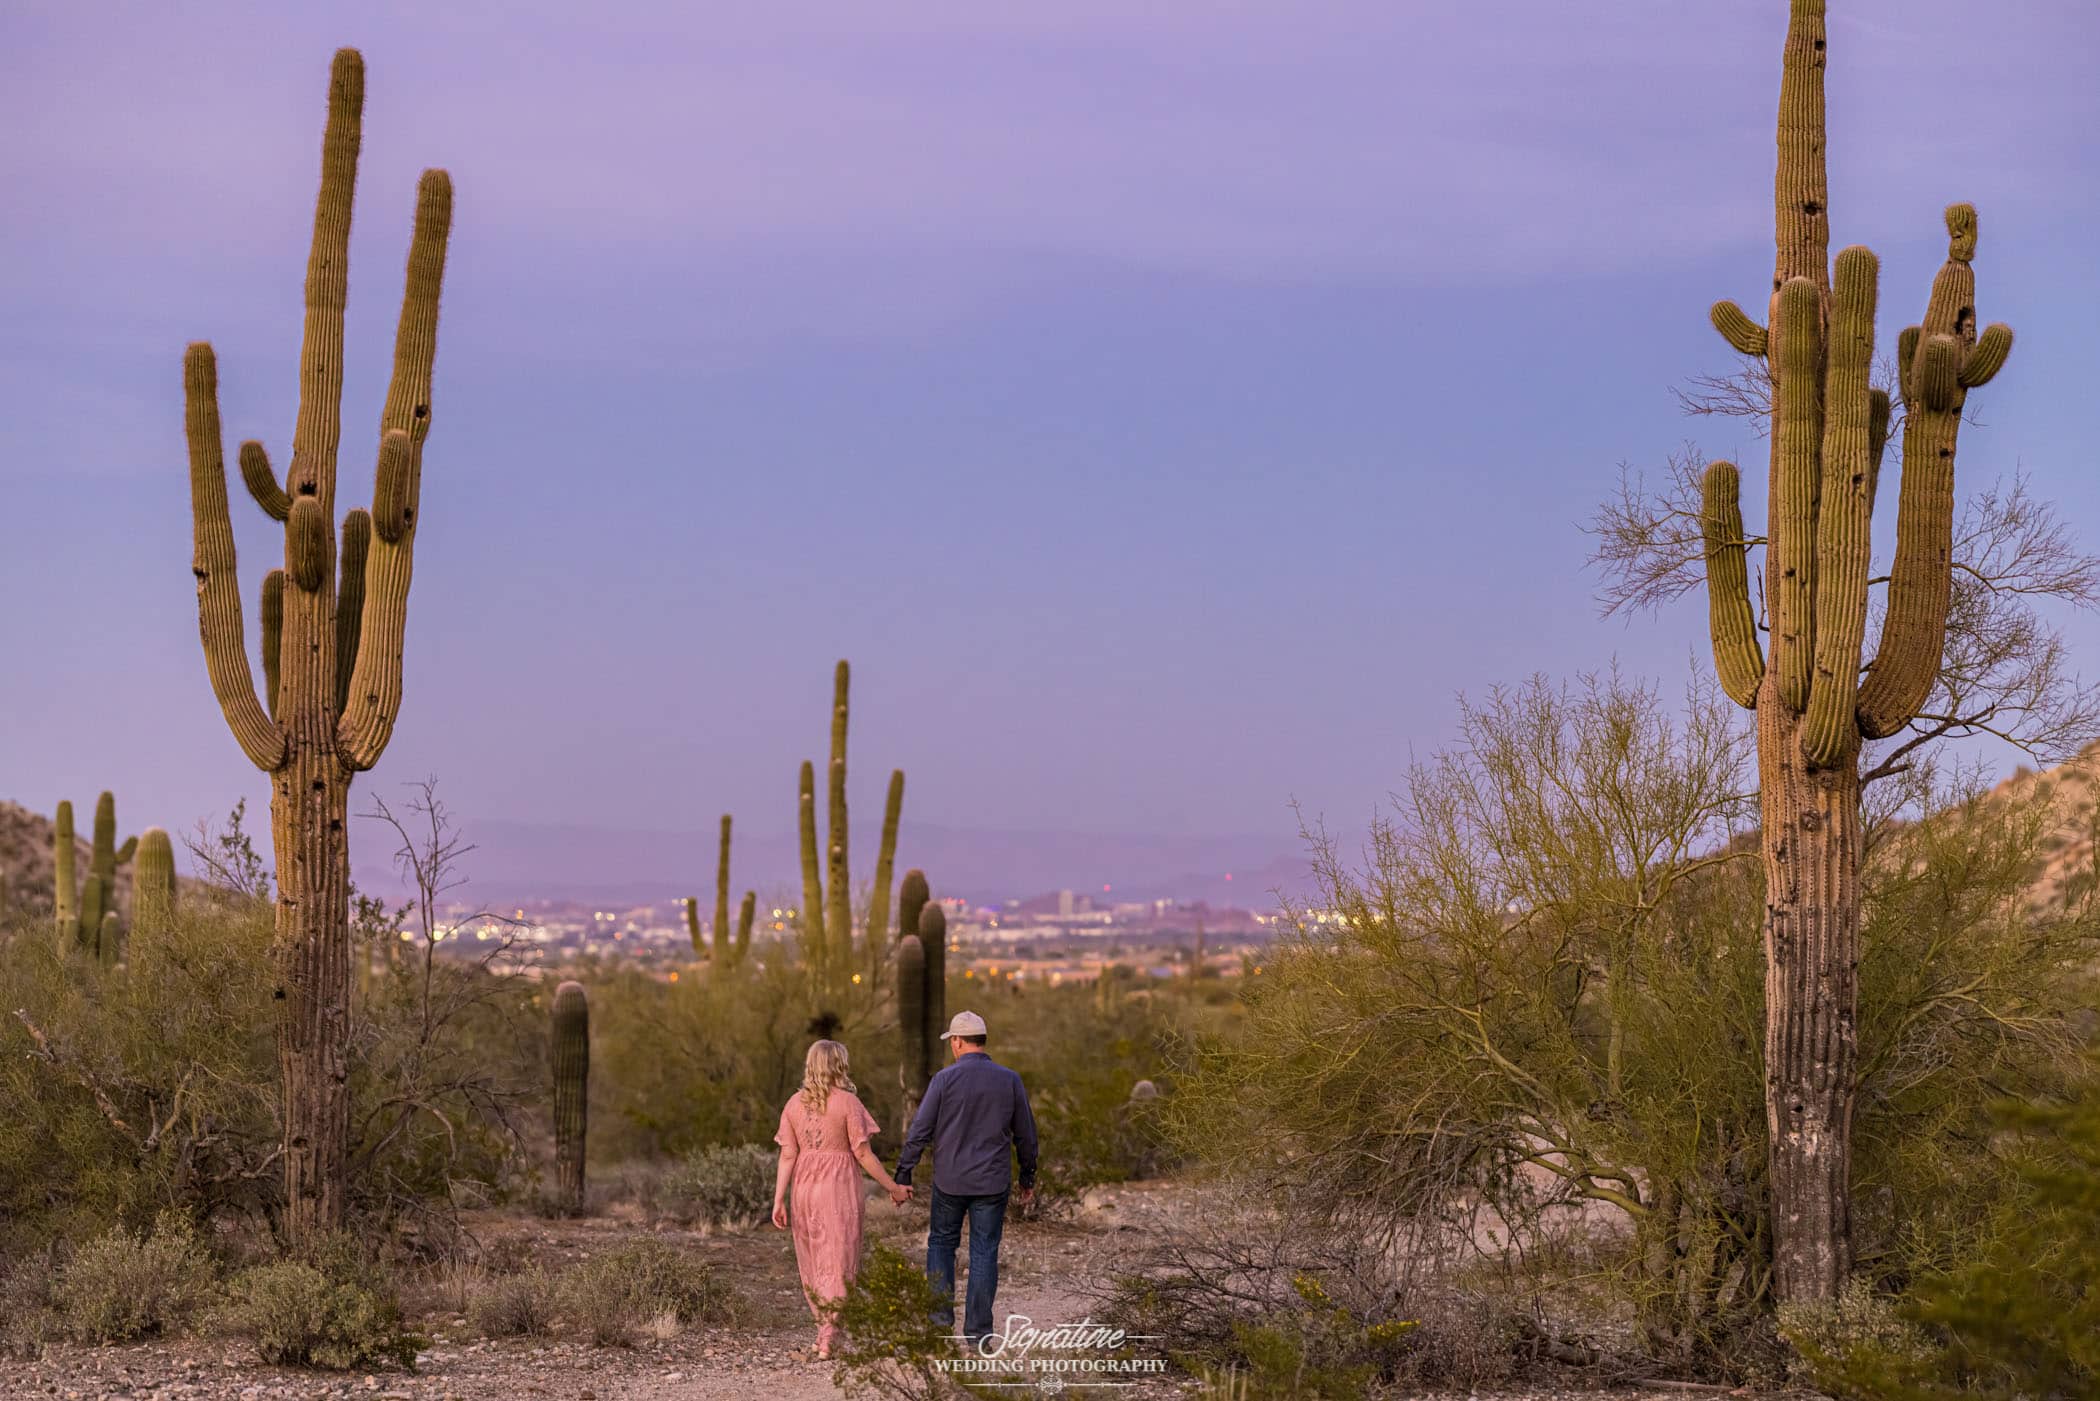 Couple holding hands walking in desert at sunset